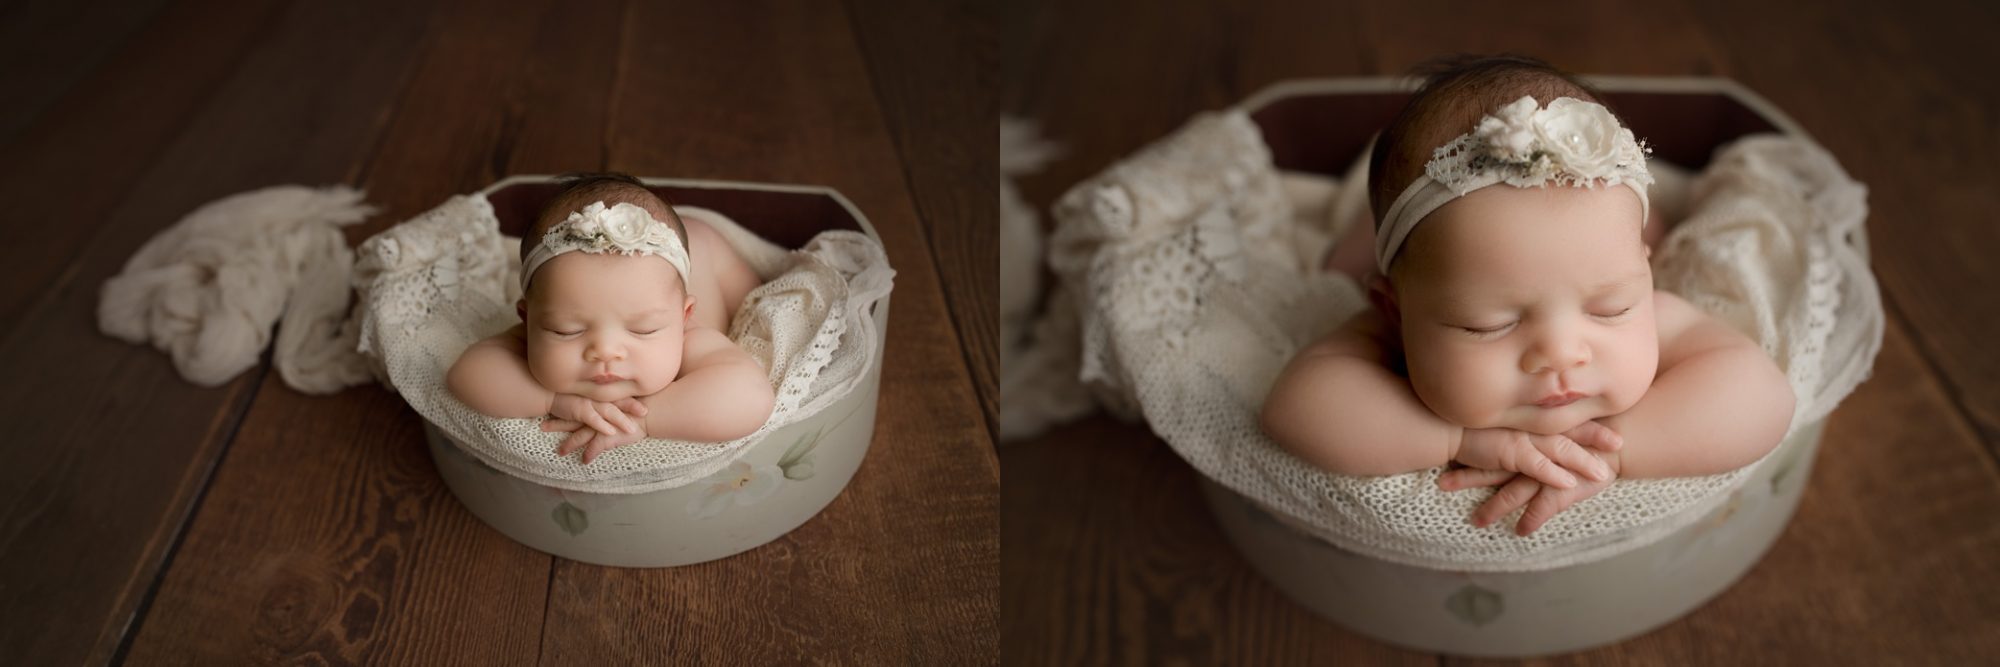 newborn photography seattle | newborn baby photographer tacoma | posed newborn session